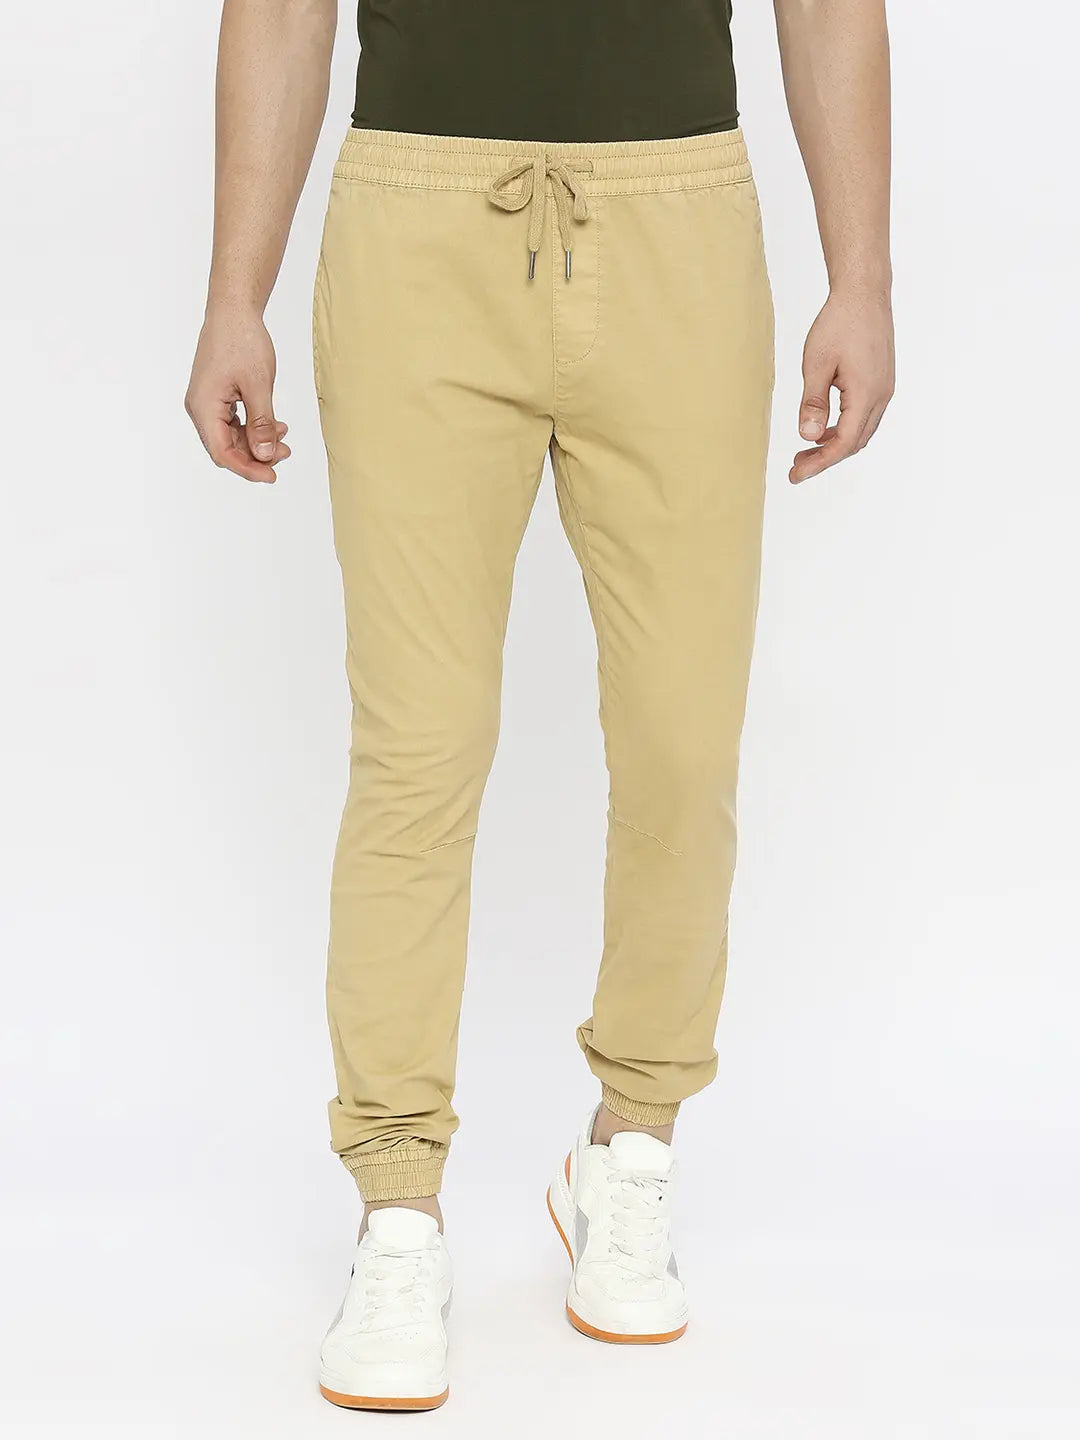 Buy Camel Trousers  Pants for Men by JADE BLUE Online  Ajiocom